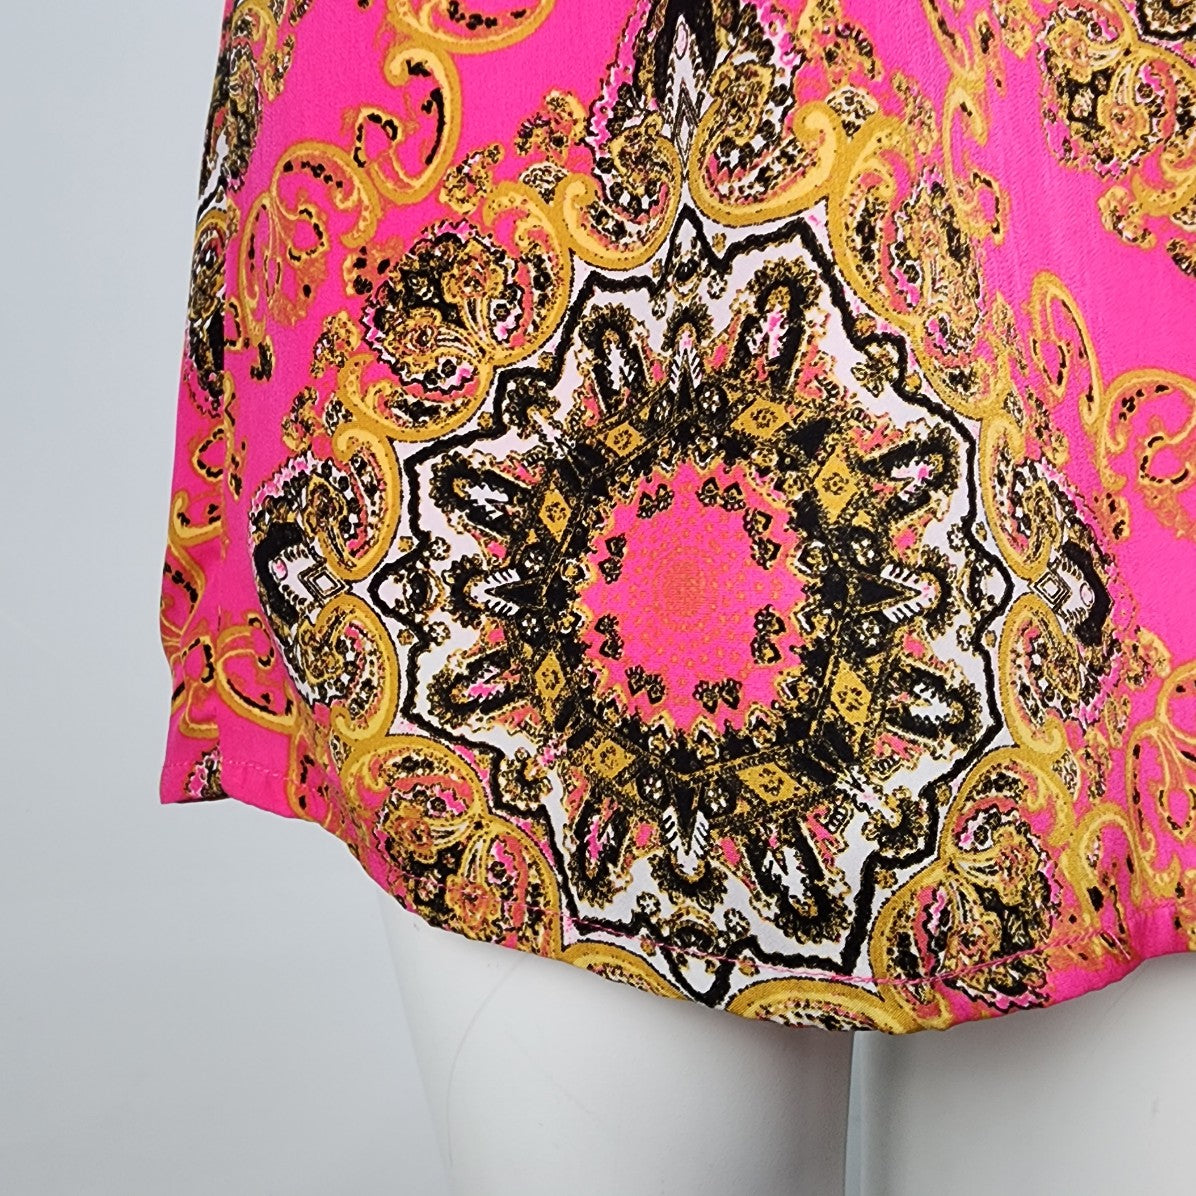 Jack Pink Kaleidoscope Print Sleeveless Fit & Flare Dress Size 4